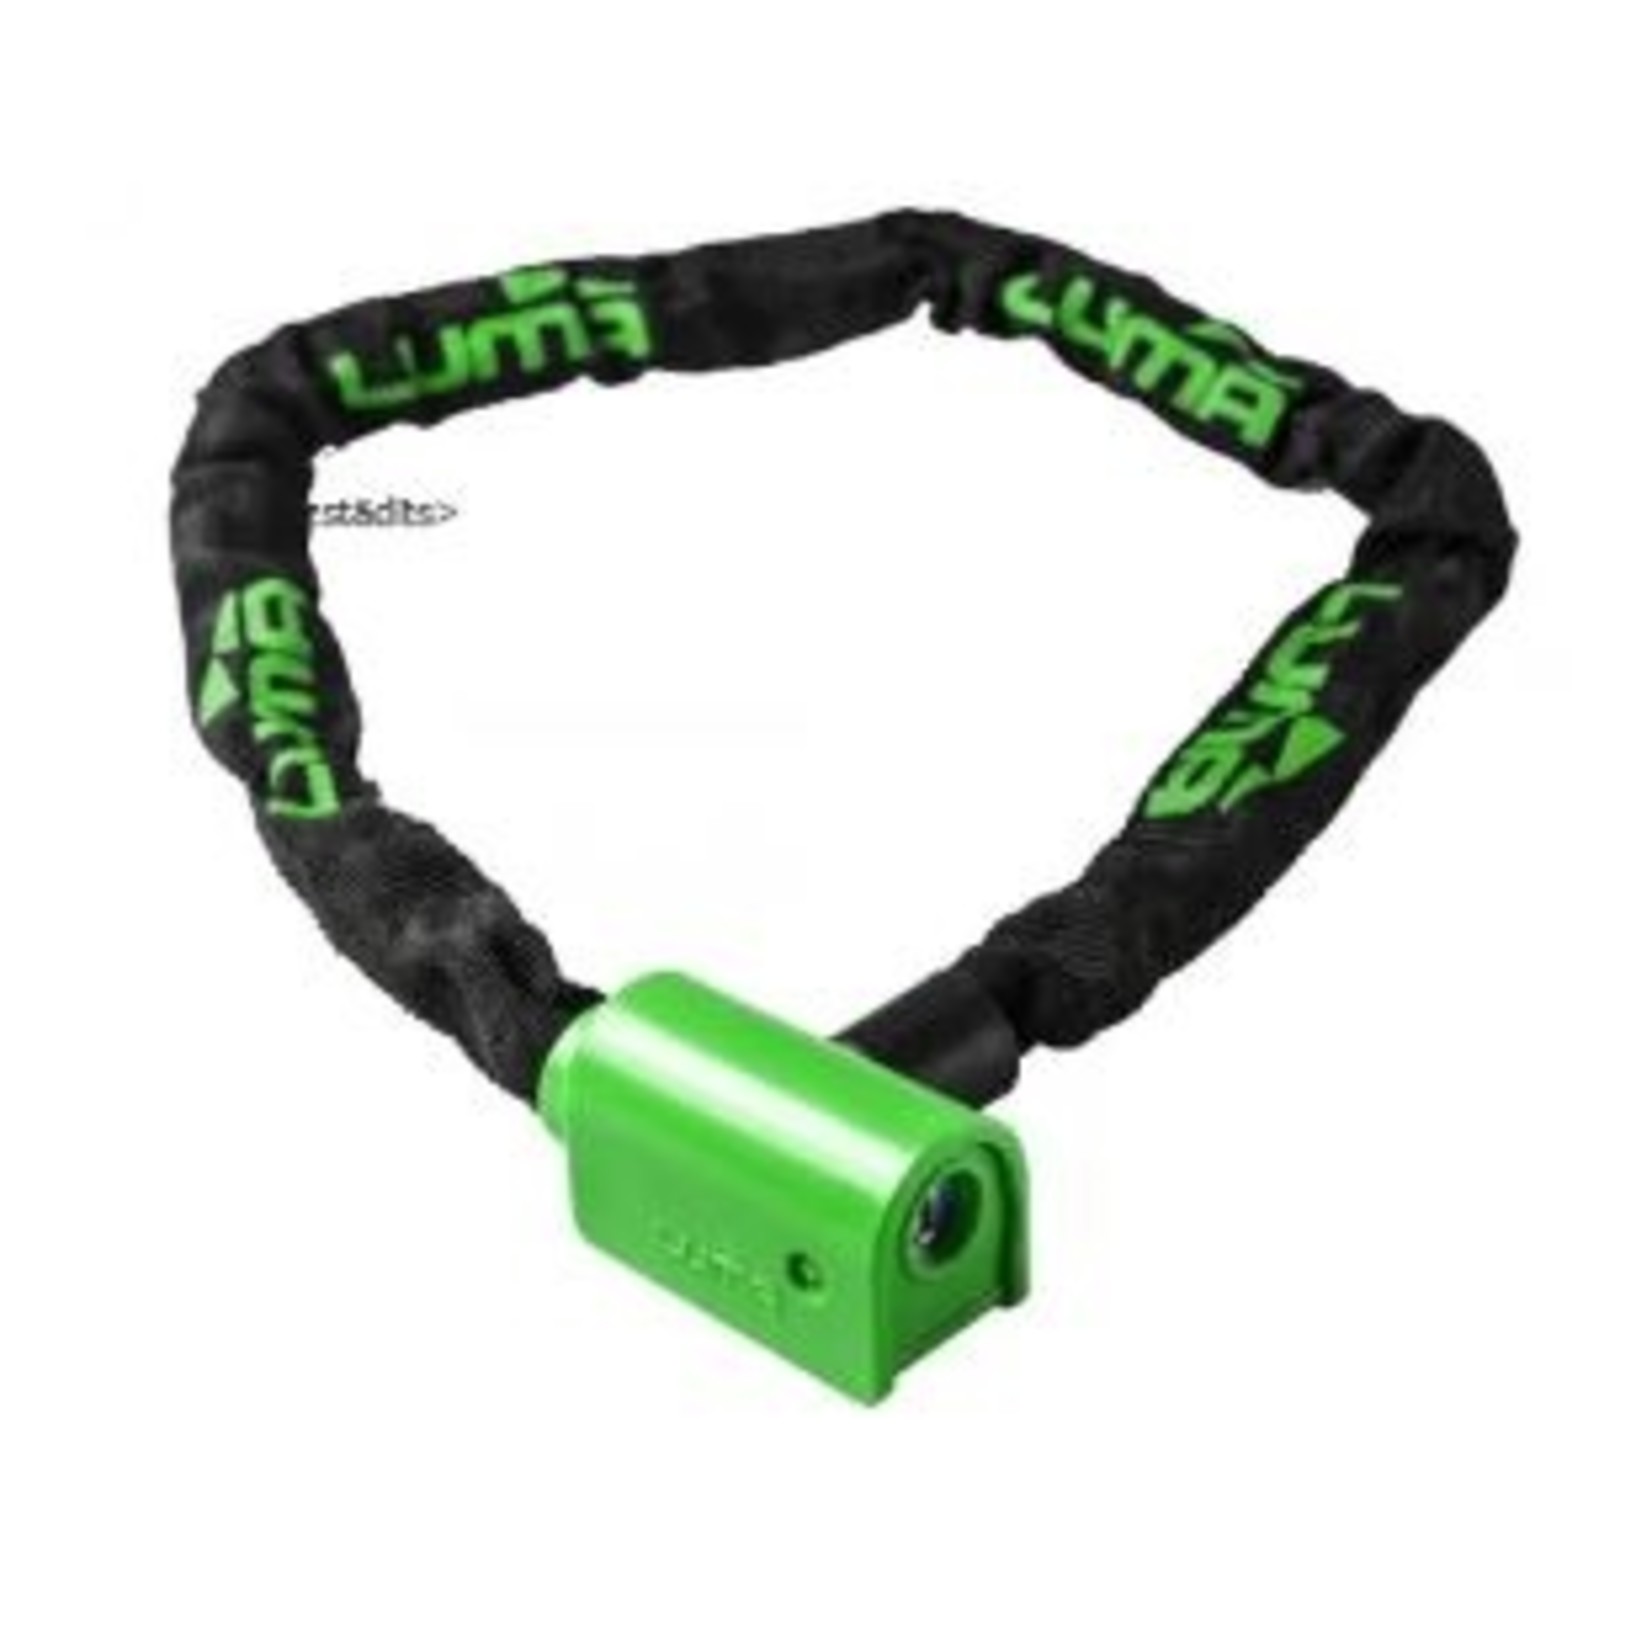 Luma Luma Bike/Cycling Lock - Key Lock Chain With Cover - 5mm X 1000mm With Green